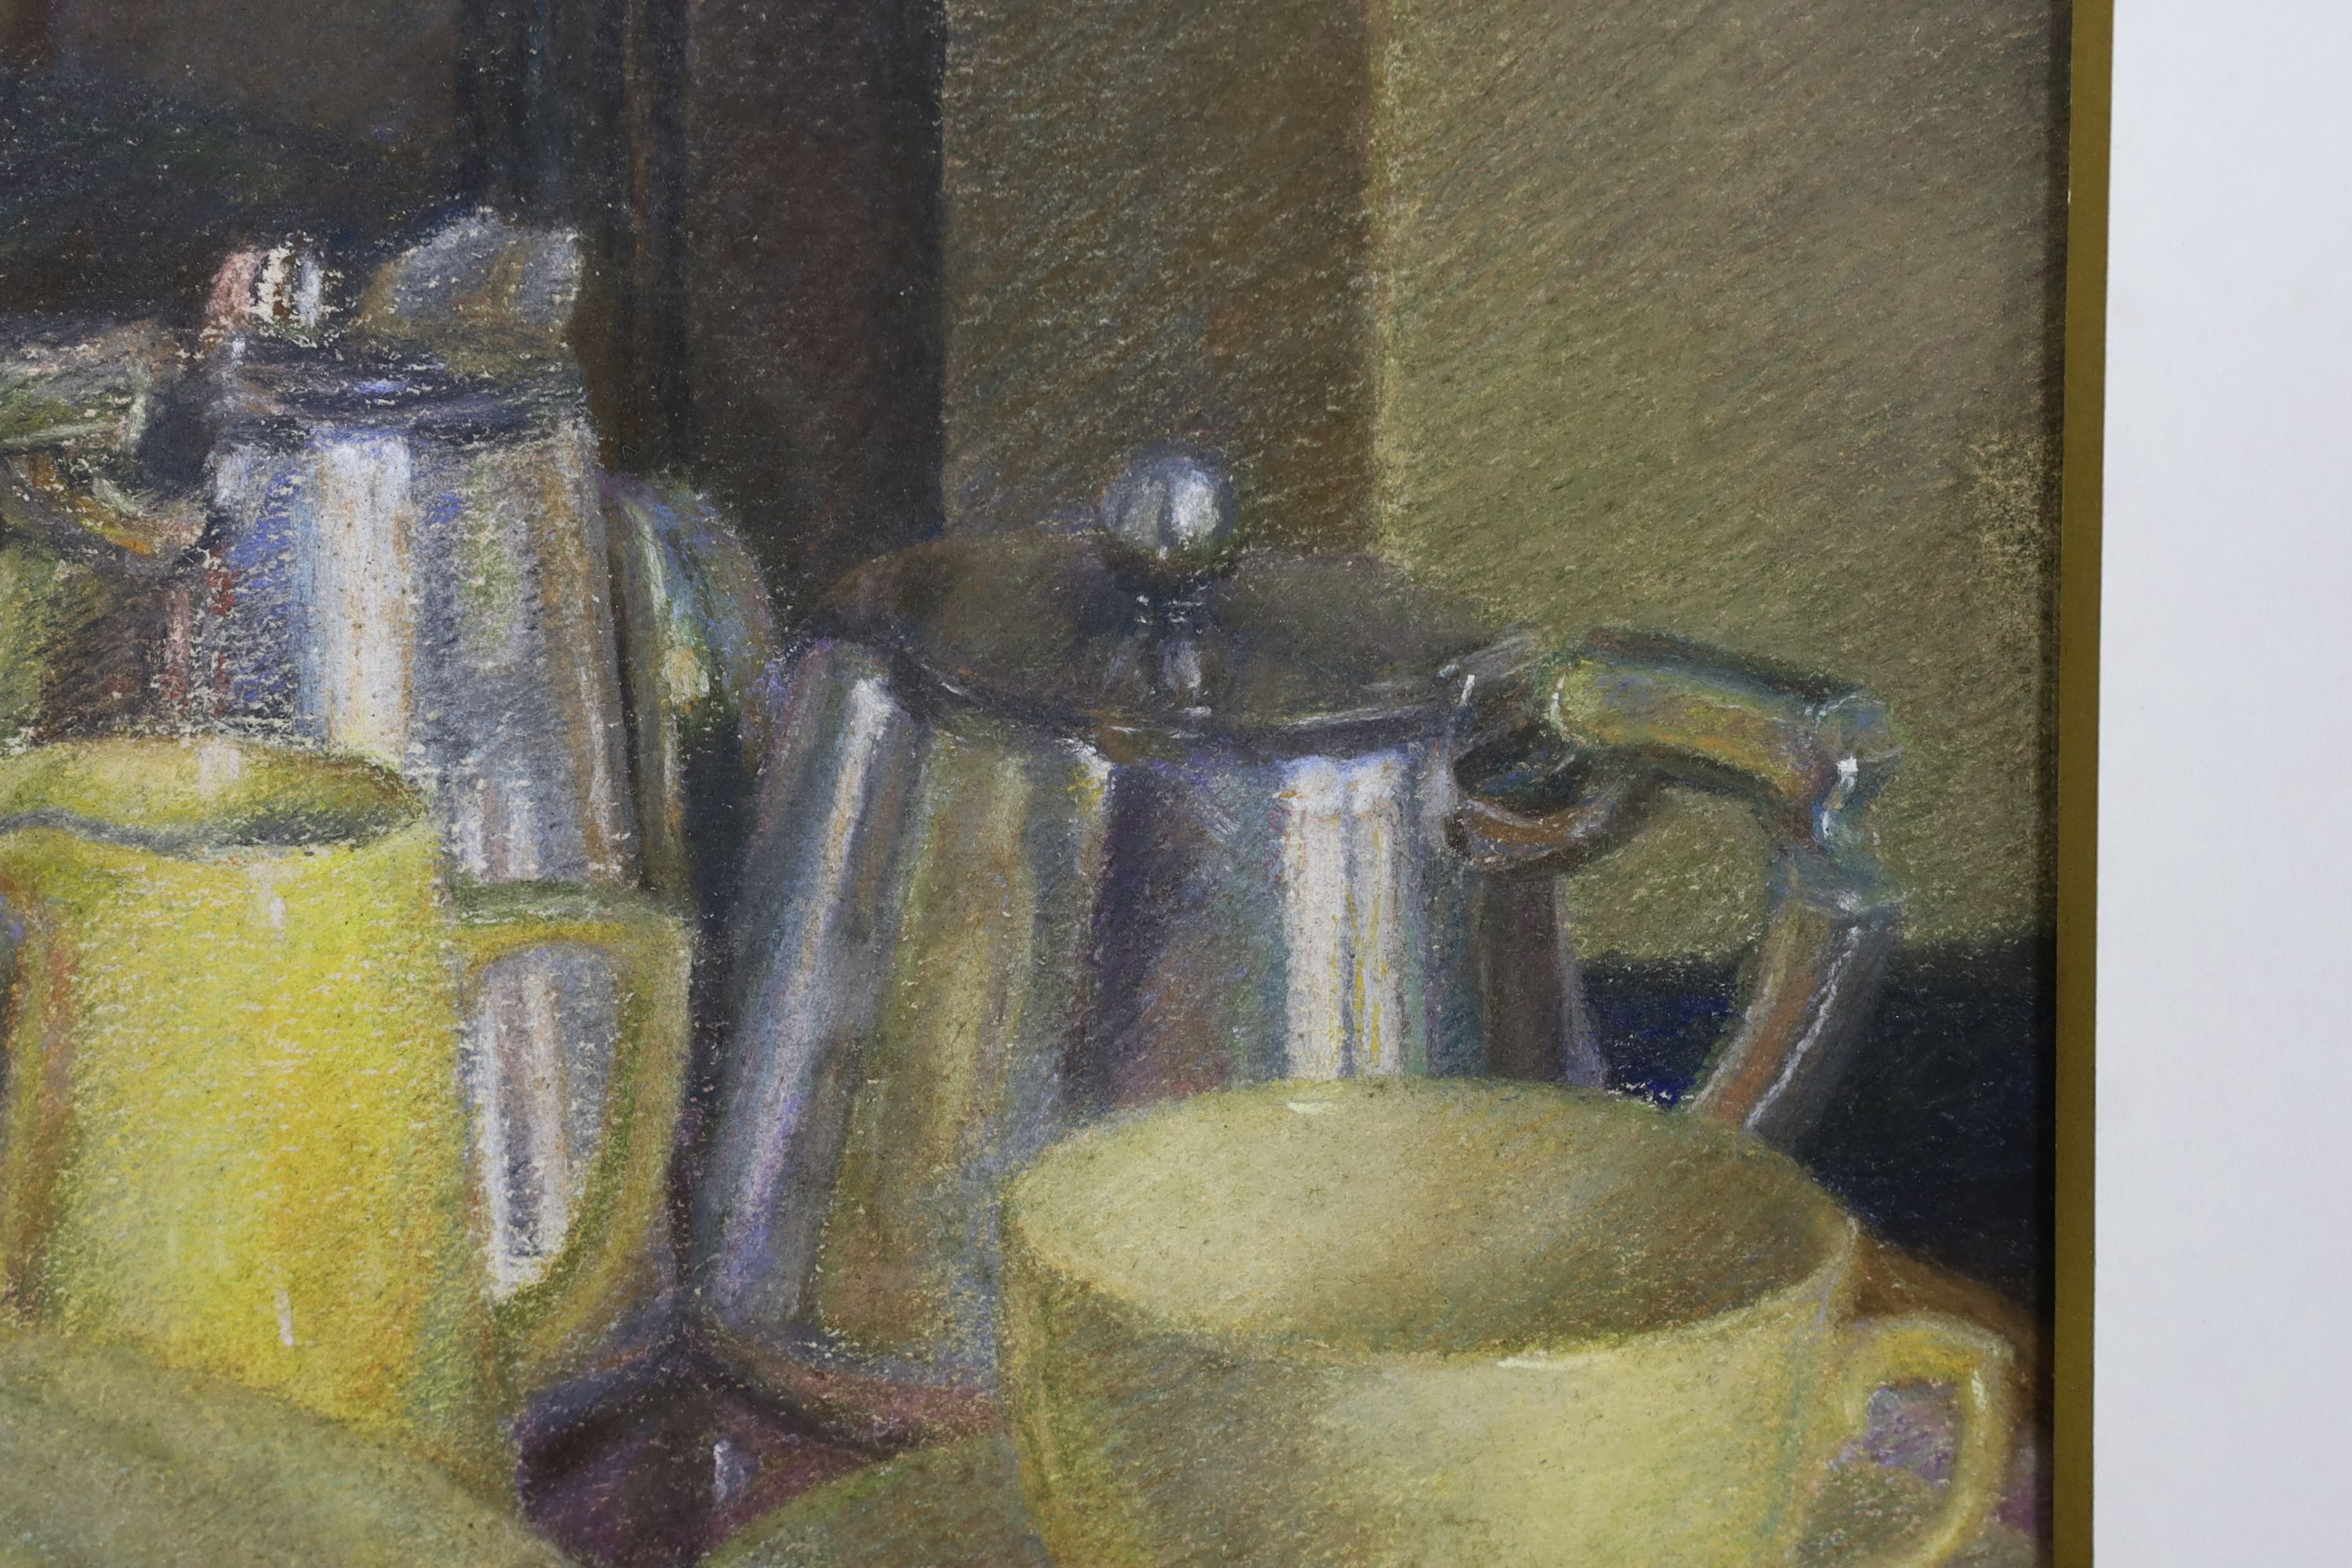 Hilda Carline (1889-1950), pastel, Breakfast table still life, 28 x 38cm